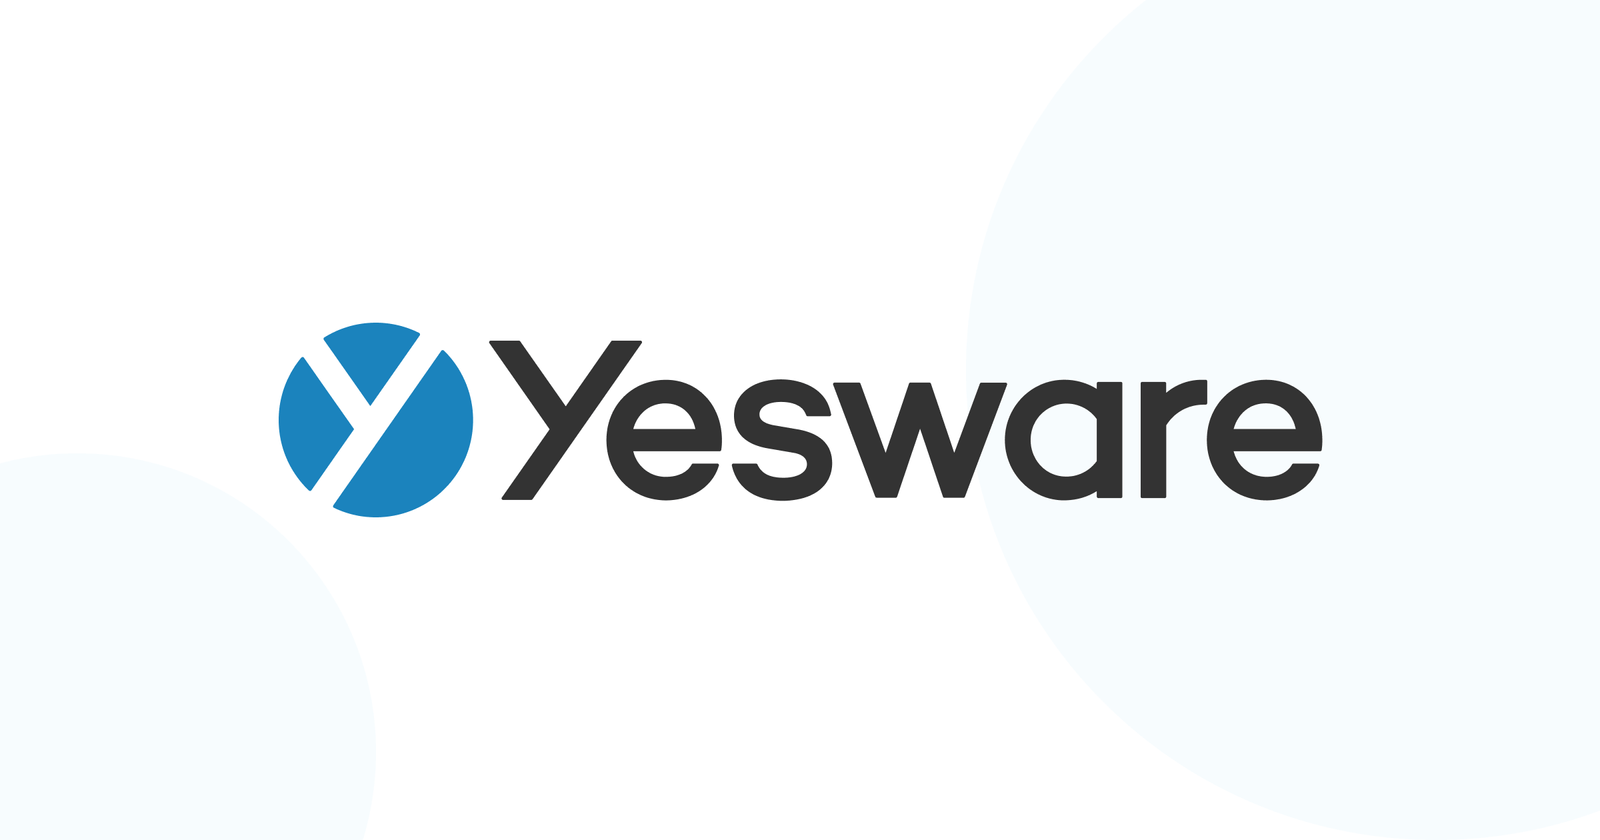 Yesware - обзор, отзывы, цены, альтернативы, функционал